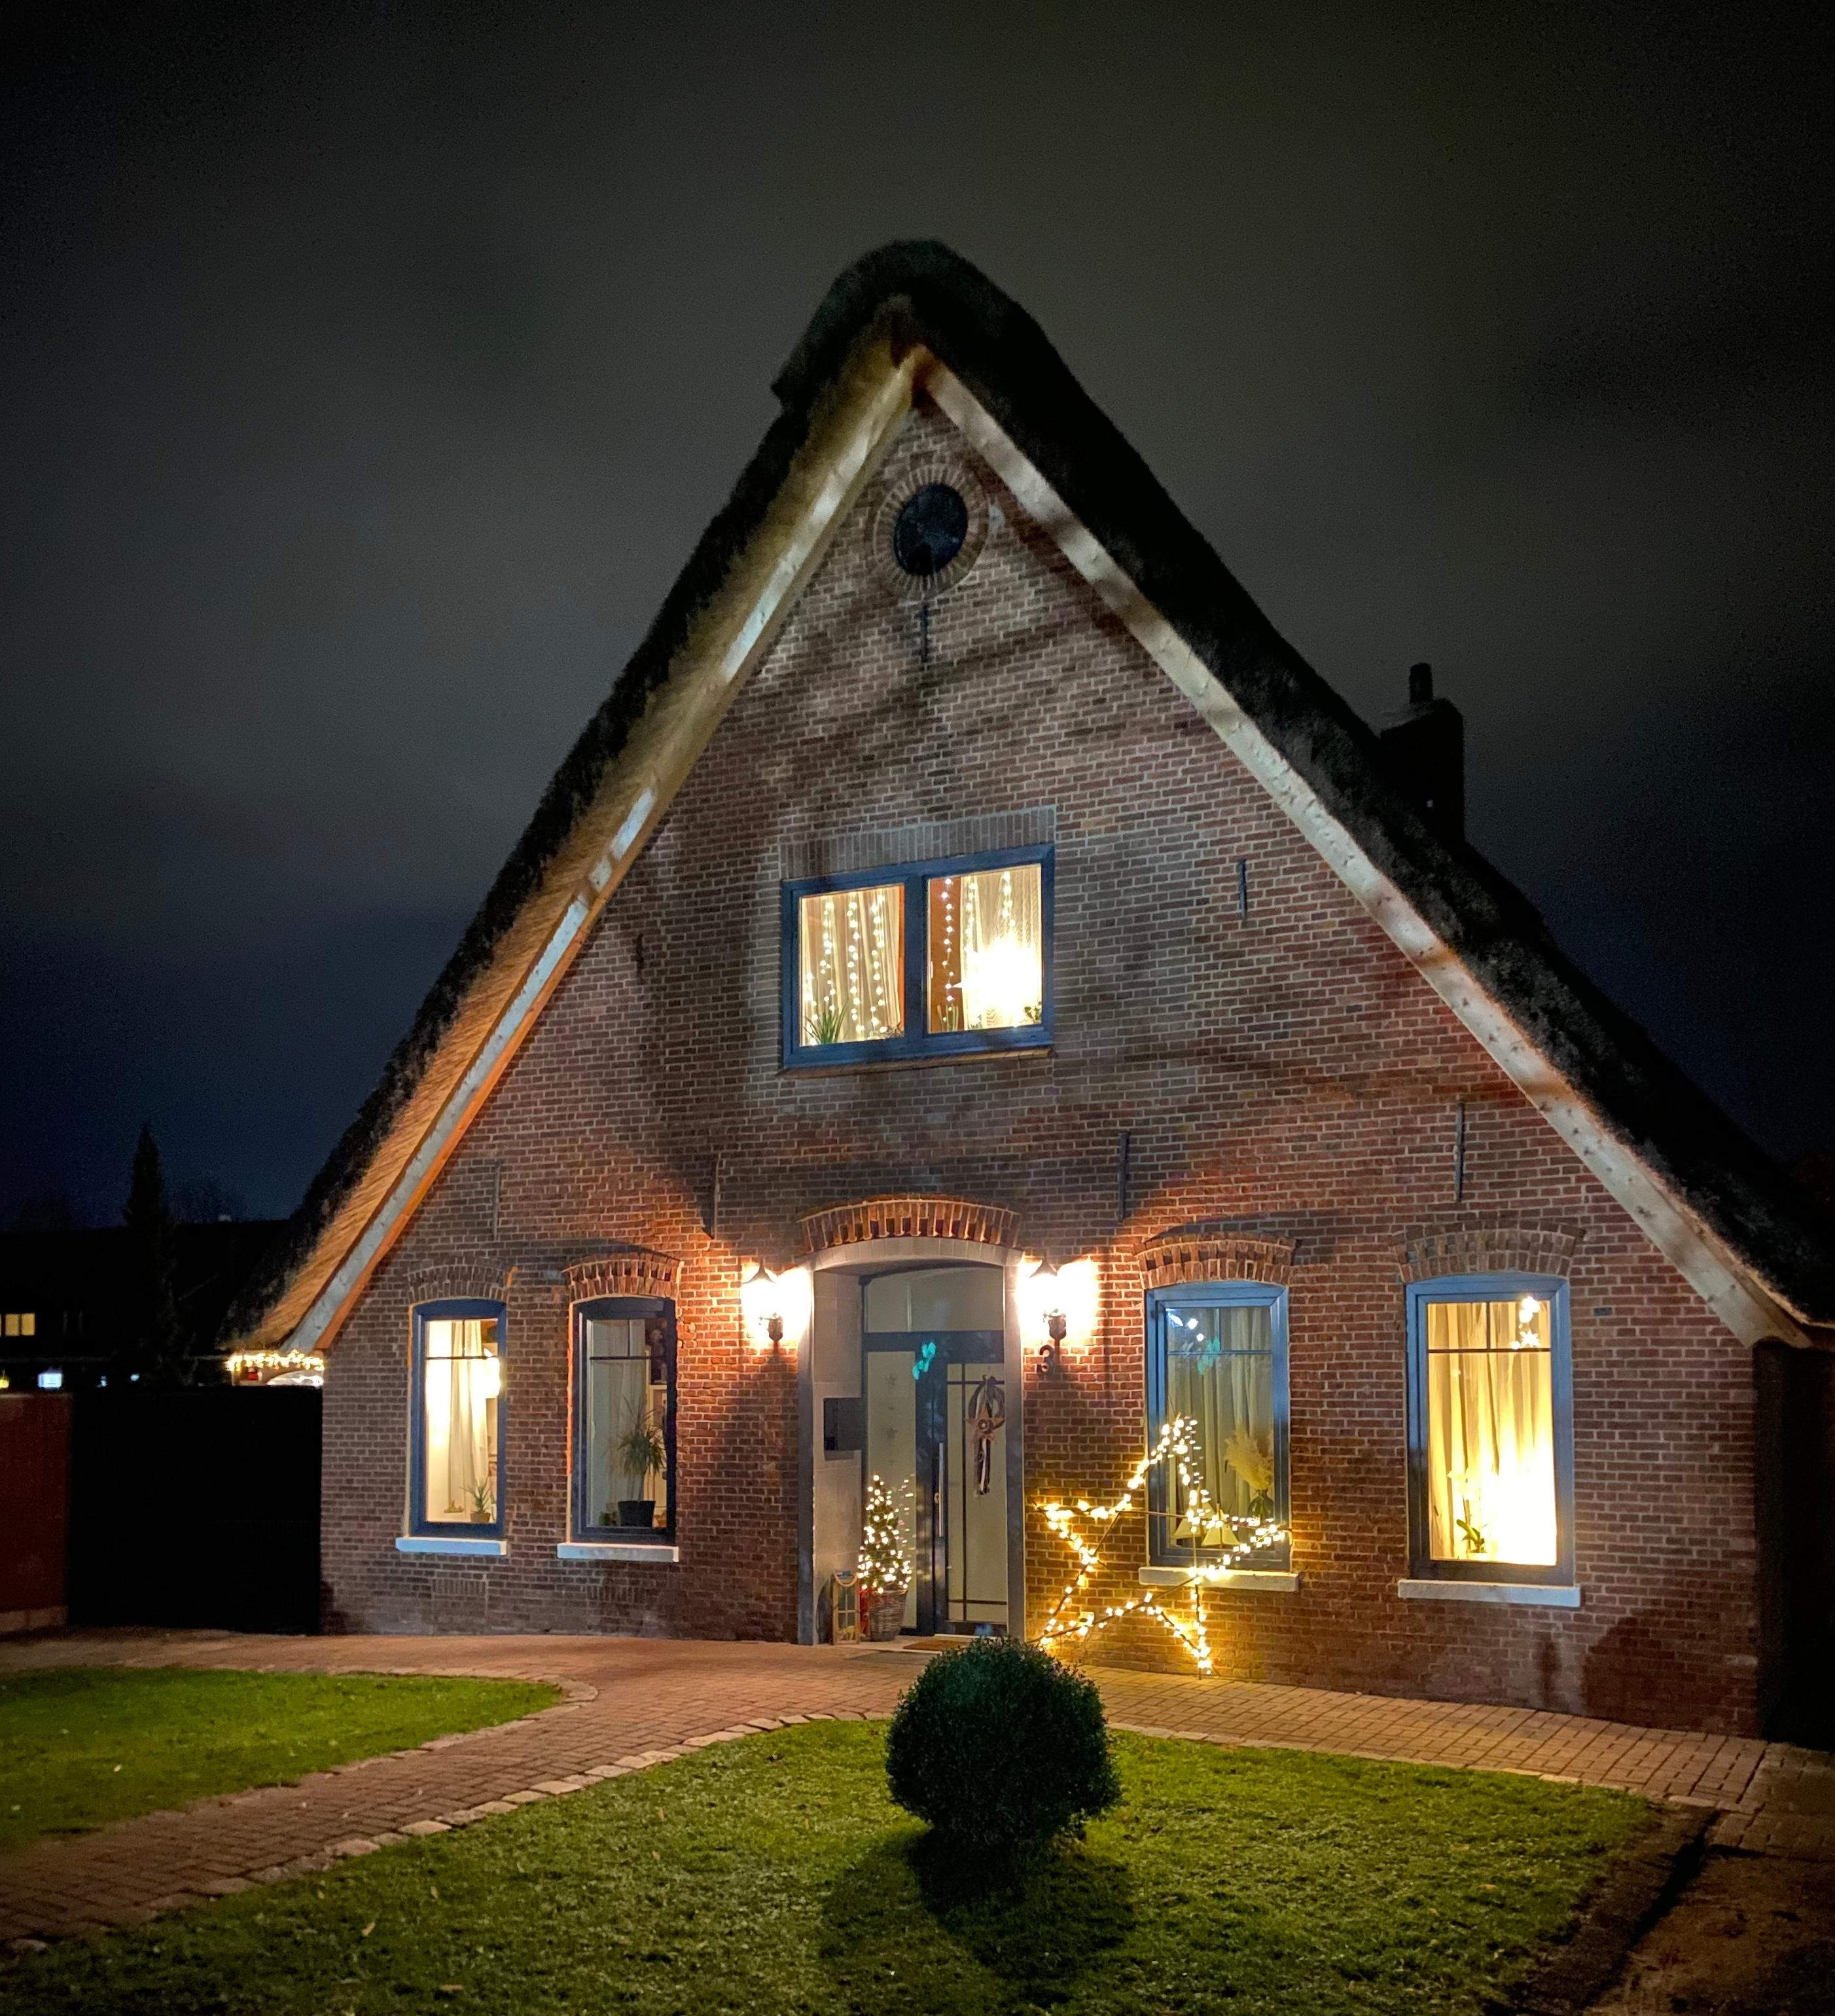 #reetdachhaus #landhaus #weihnachtsbeleuchtung #homesweethome